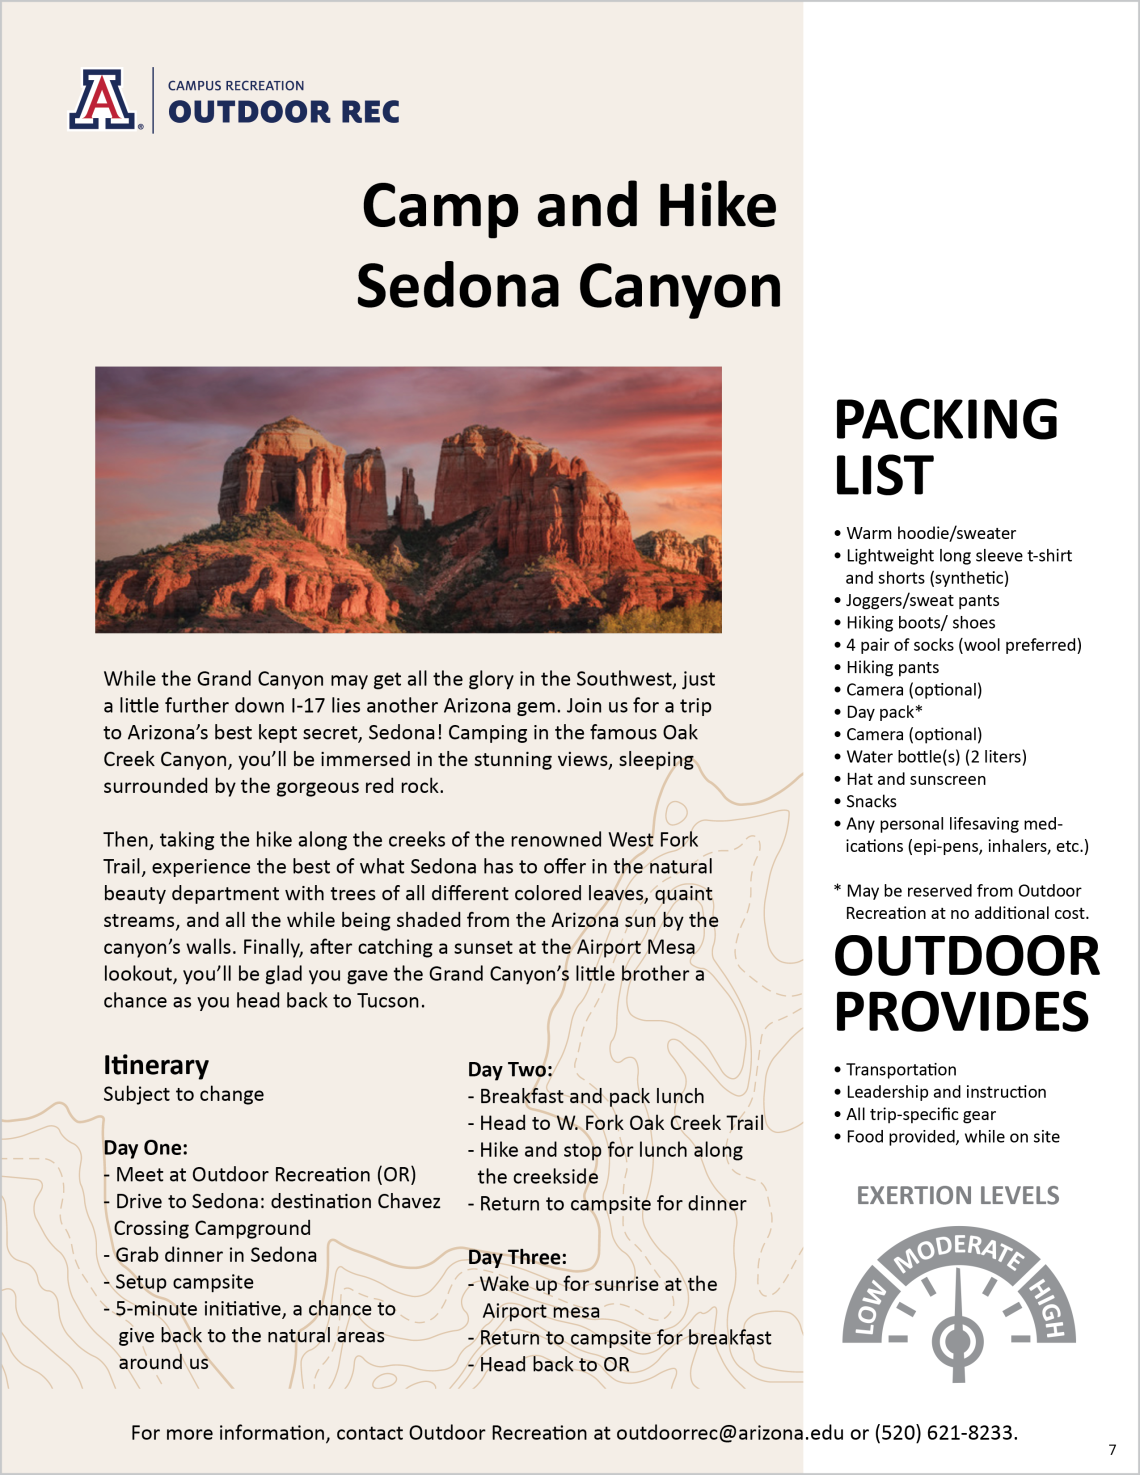 Camp and Hike - Sedona Canyon